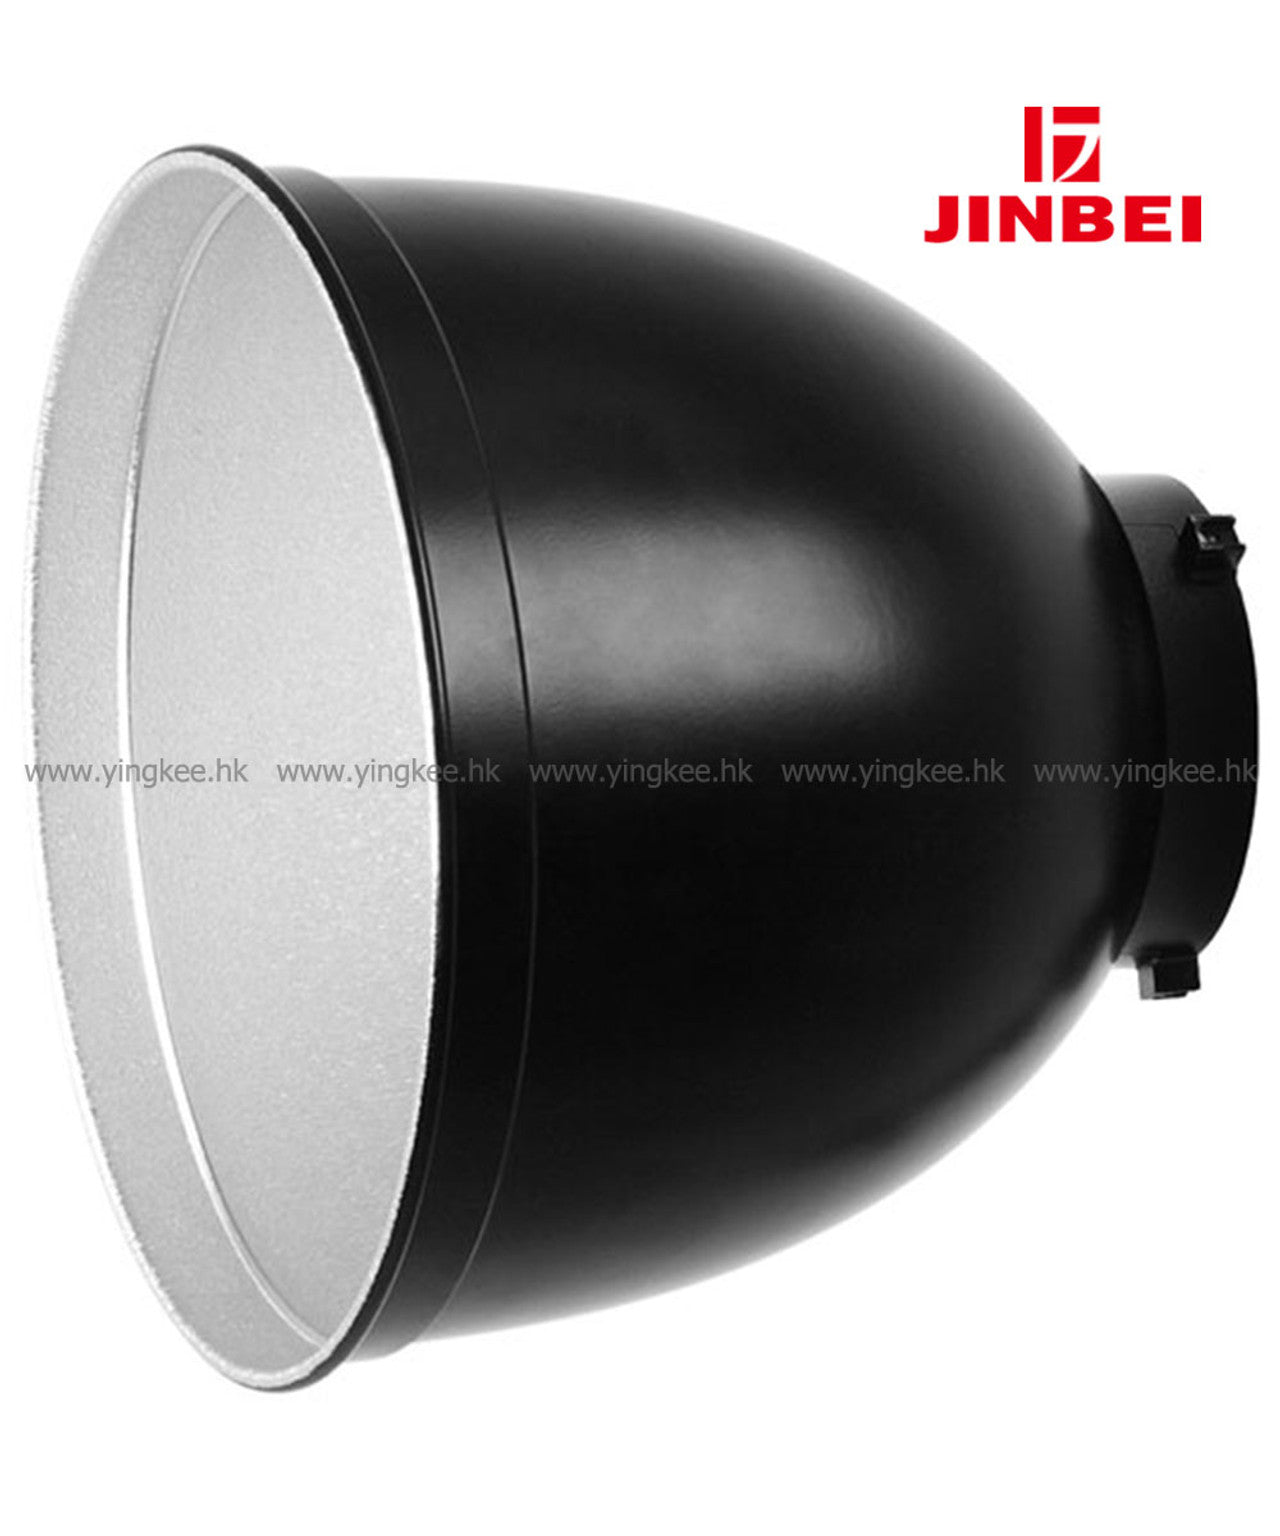 Jinbei 金貝 Tele Reflector 65° 中距反光燈罩